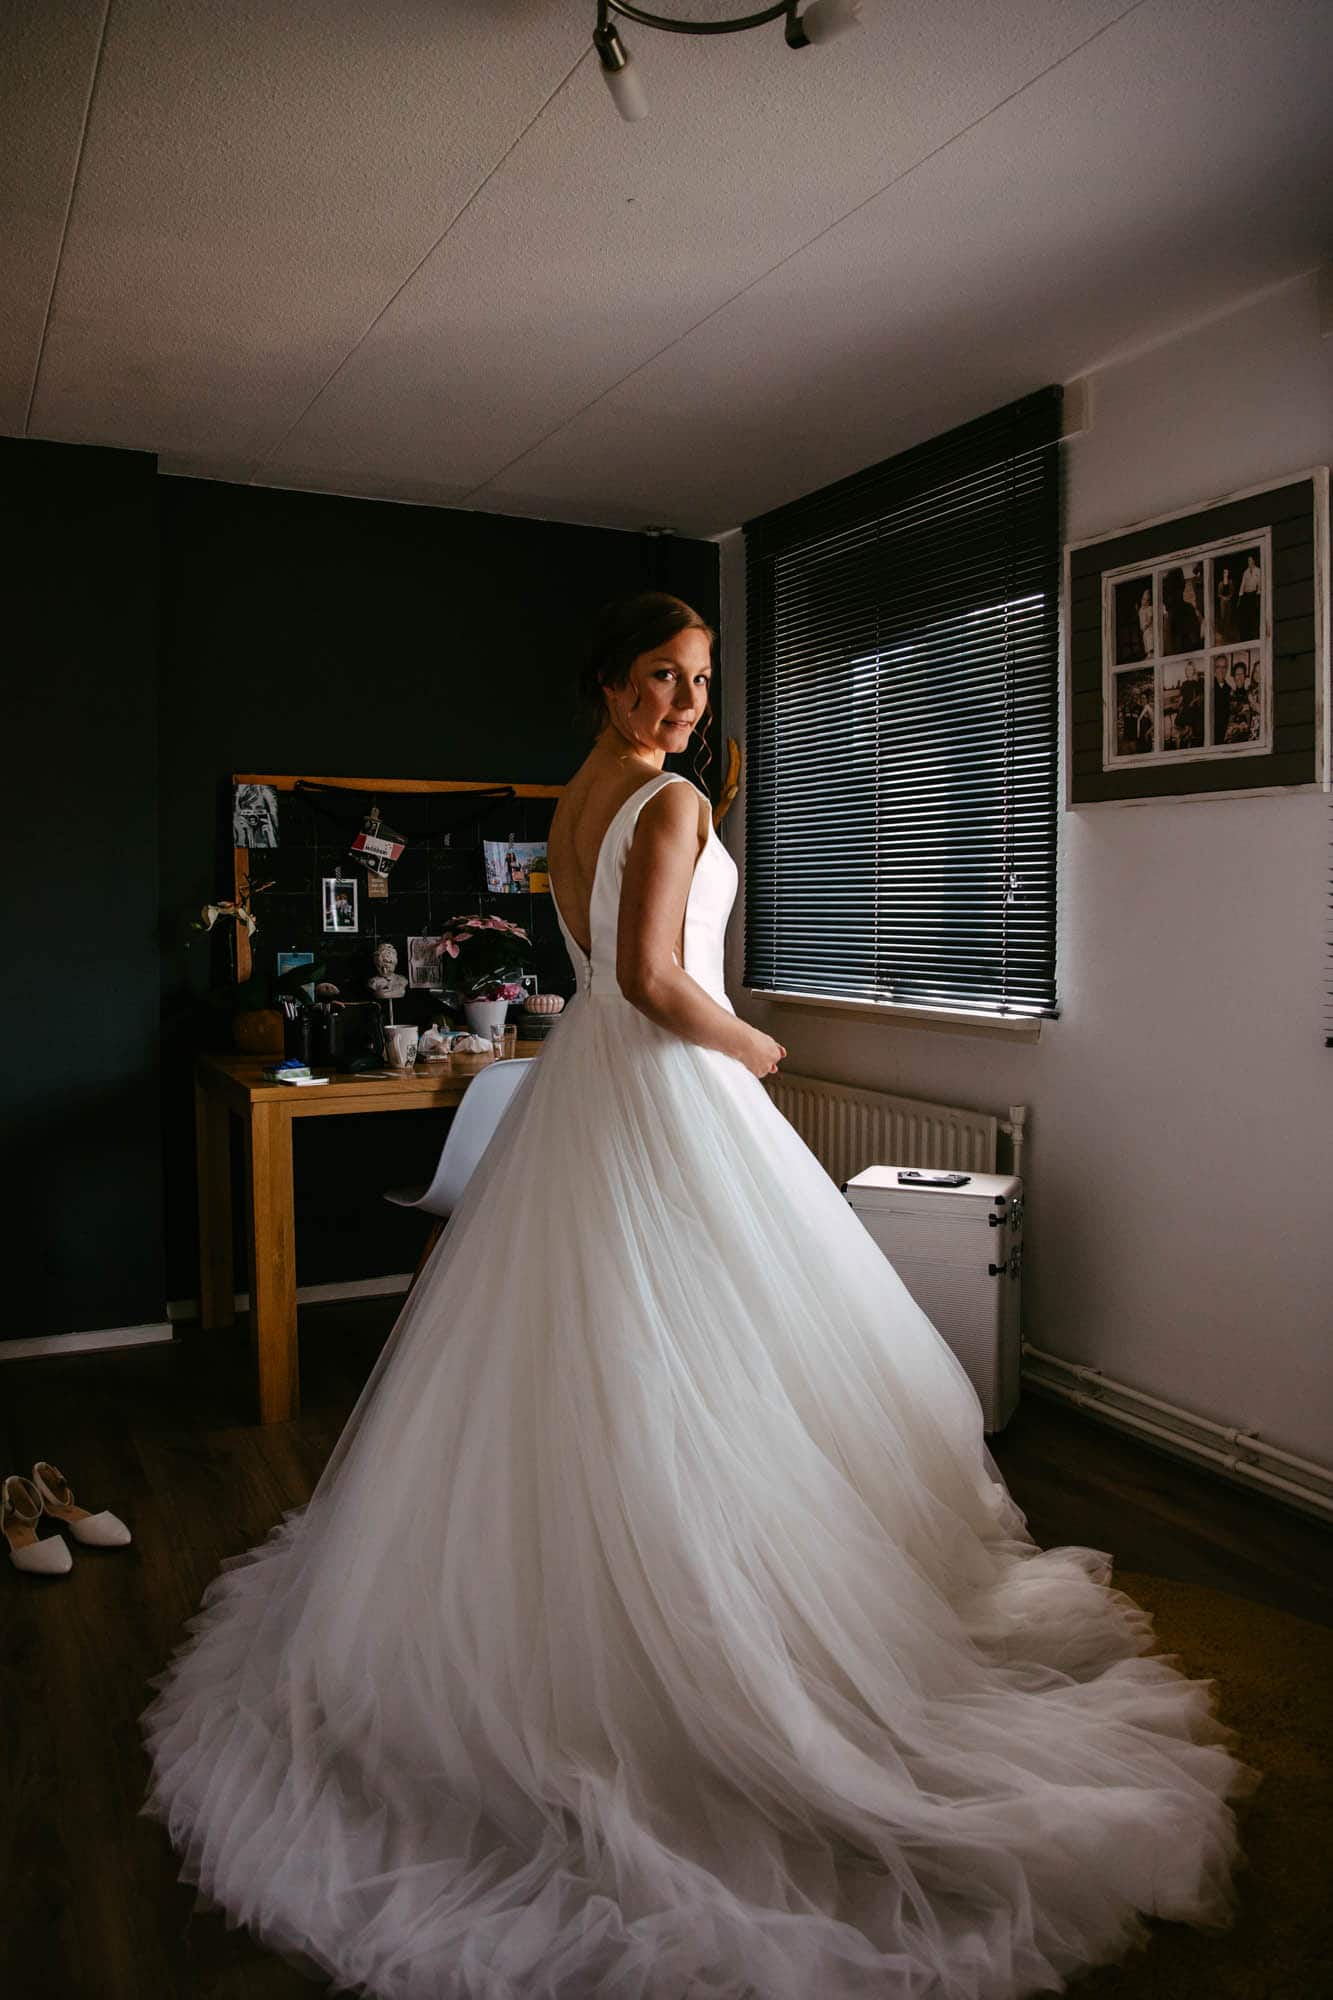 A bride in a wedding dress in a room.